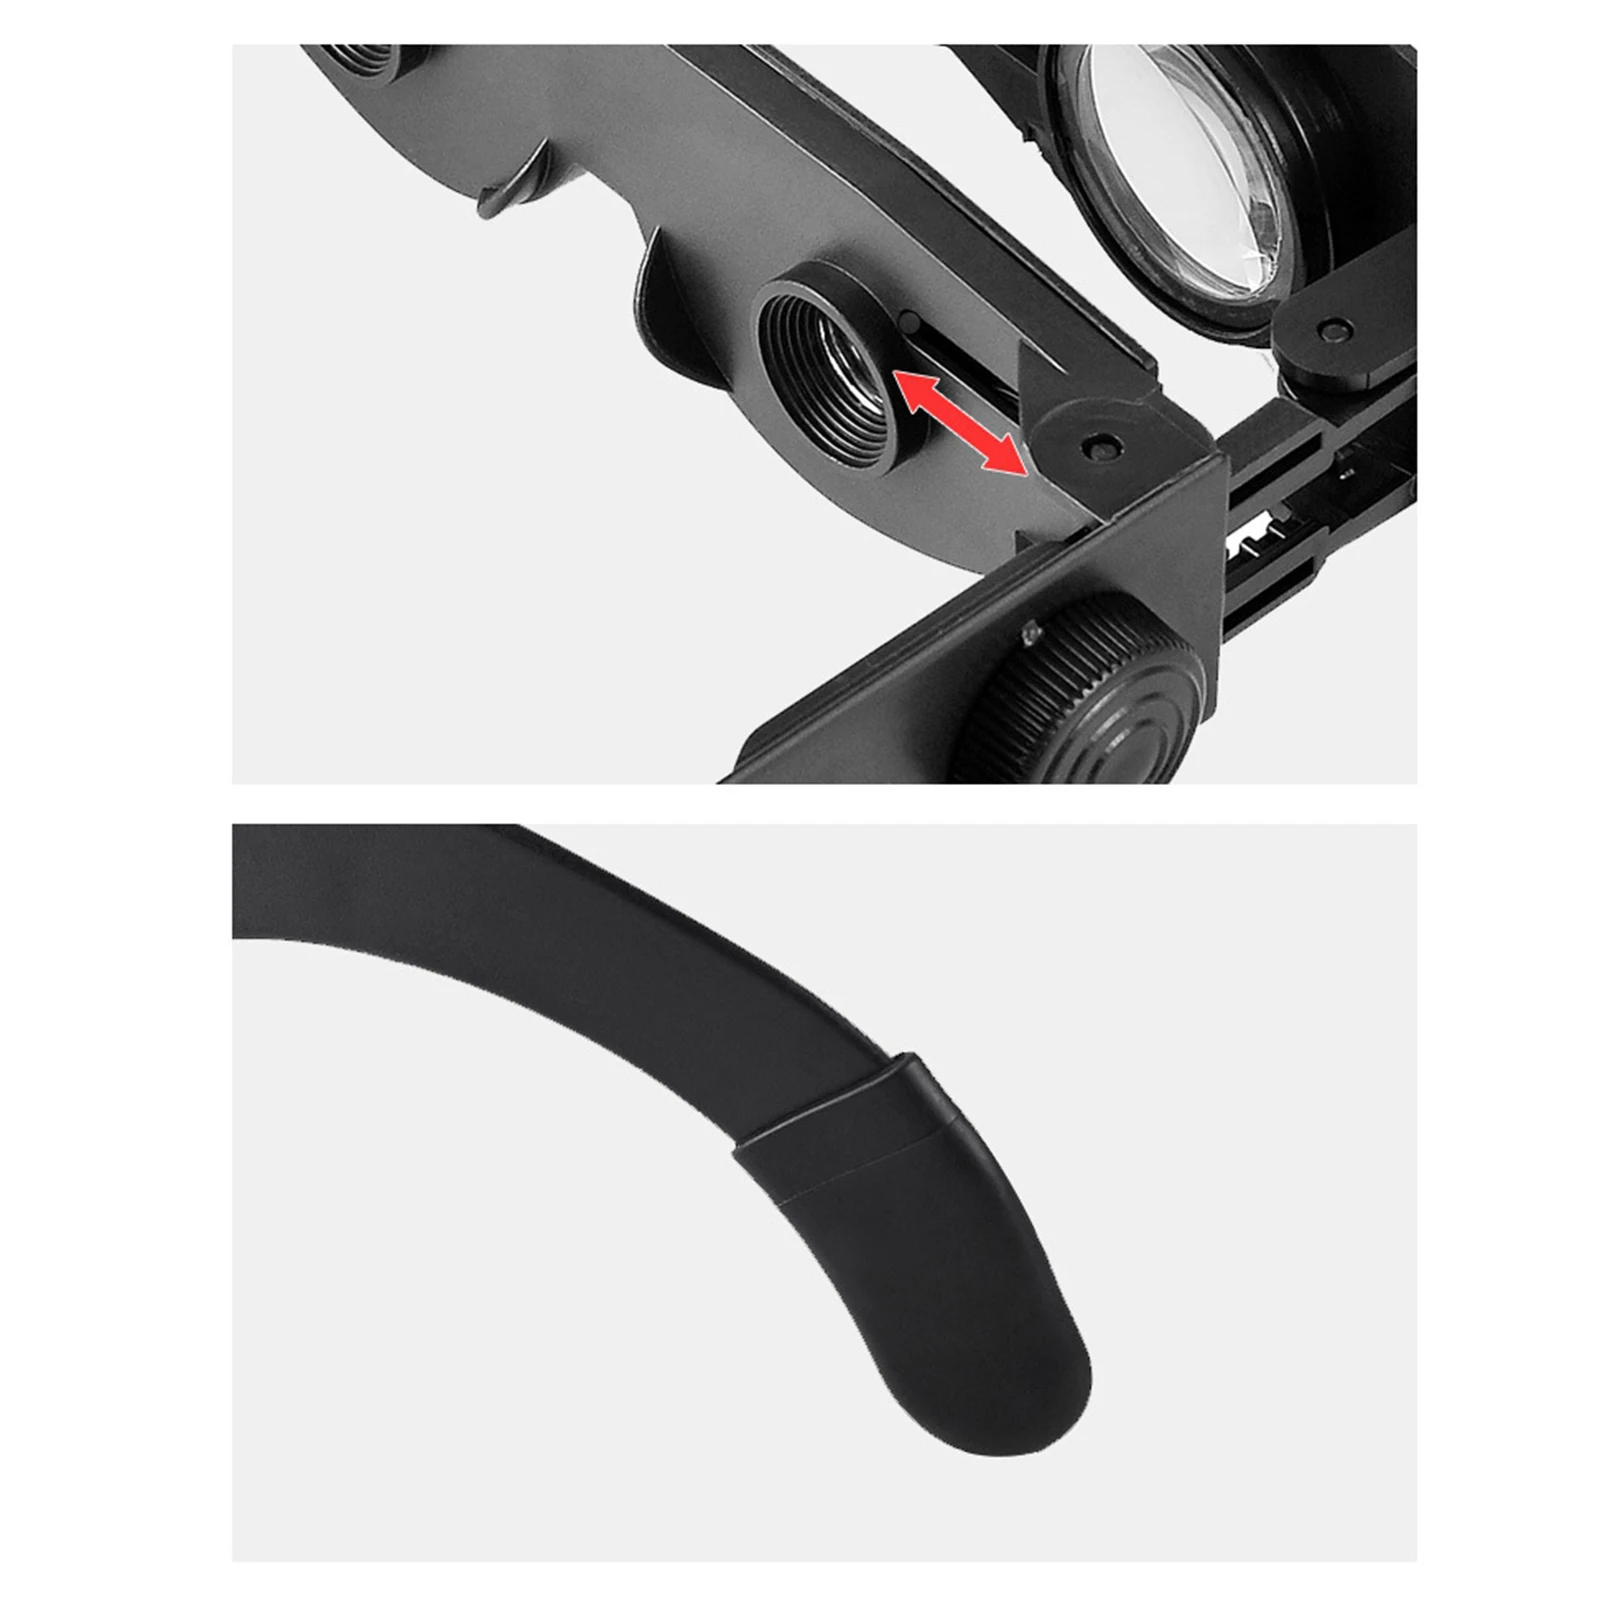 Headband Magnifier Glasses, Magnifier Hands-Free Fishing Telescope, Adjustable Focus